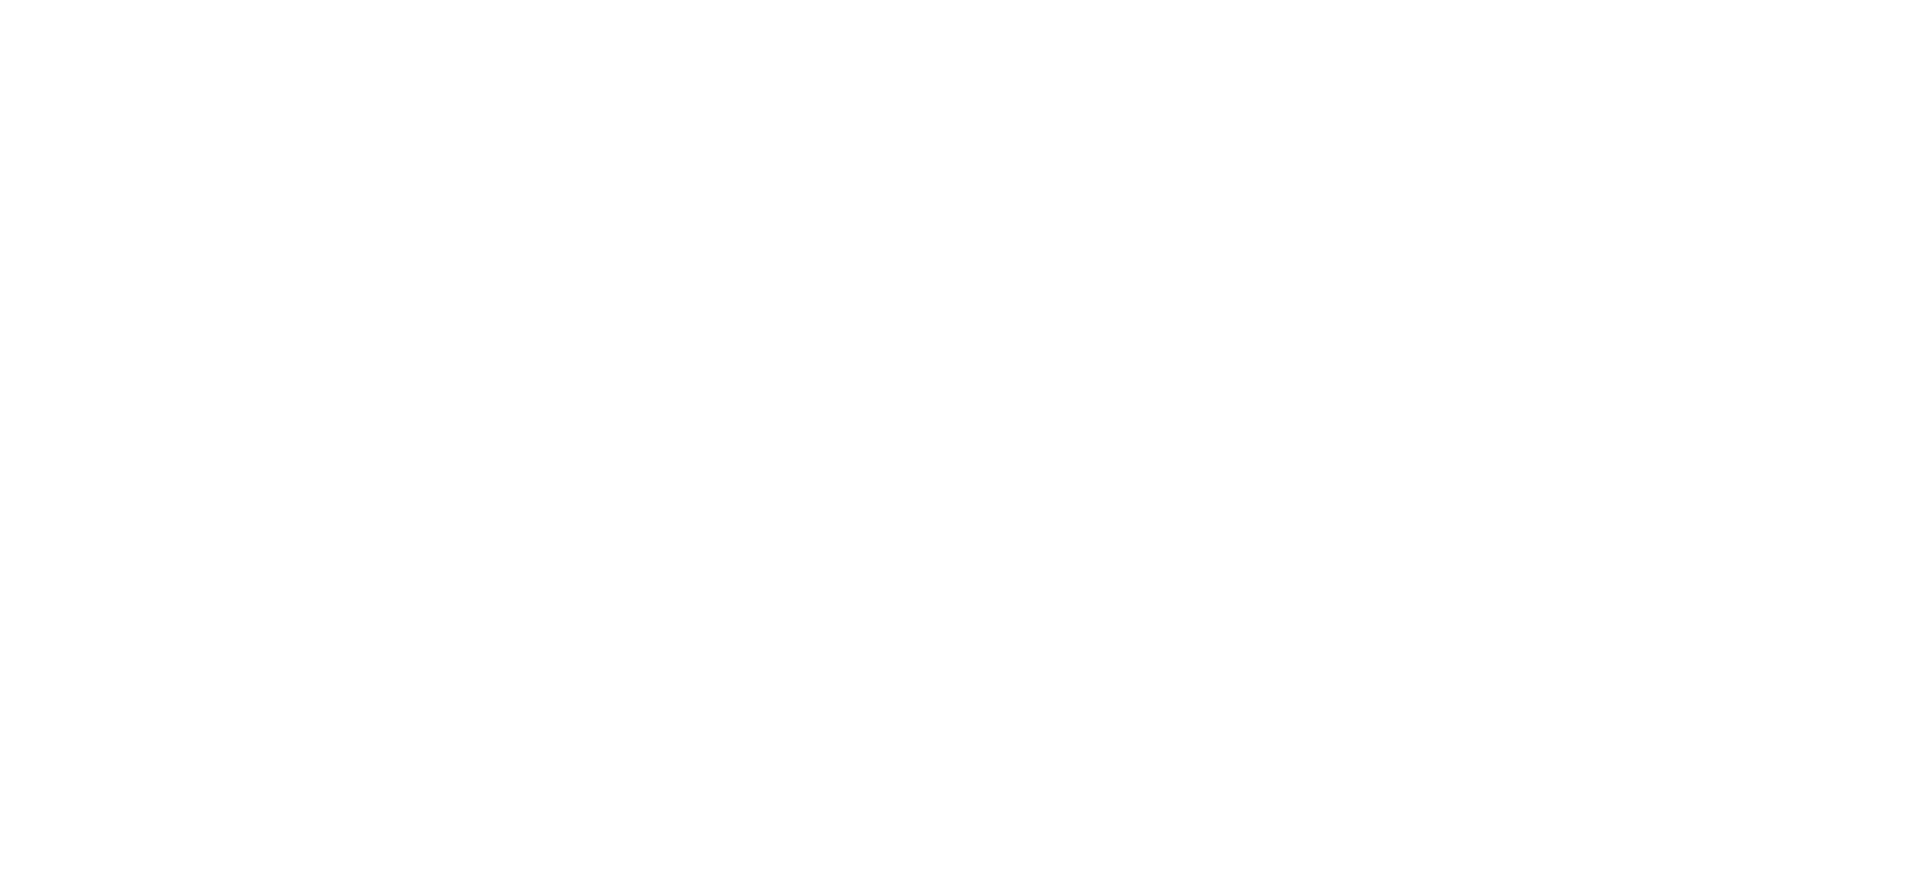 Vinderup Massage